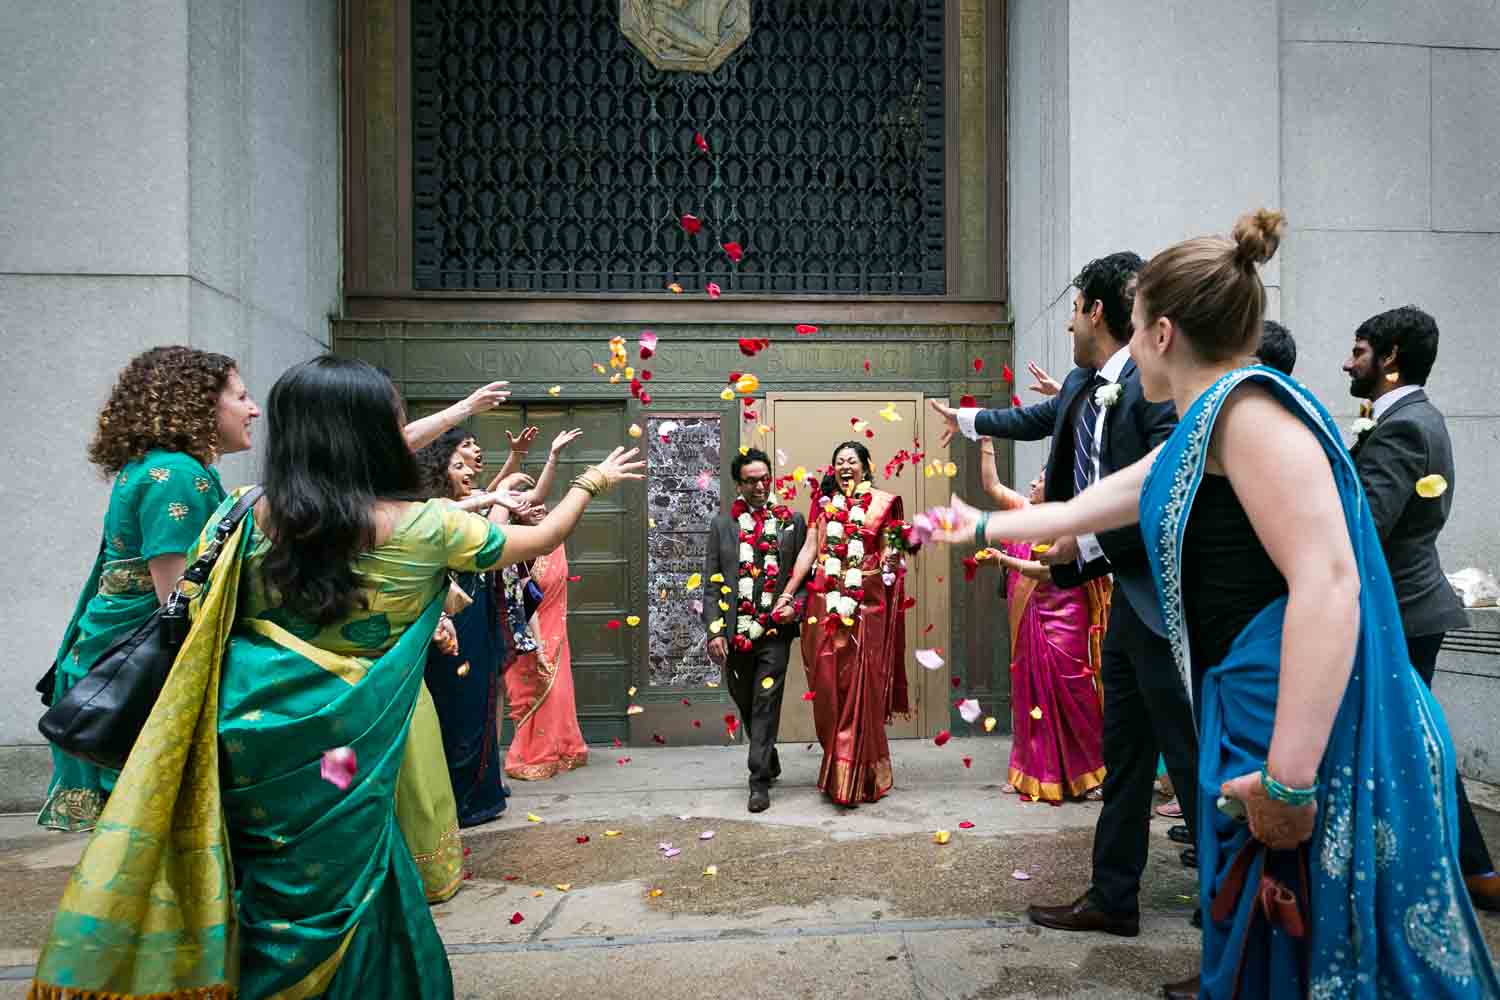 Bridal party wearing saris throwing rose petals at Indian bride and groom at a NYC City Hall Indian wedding